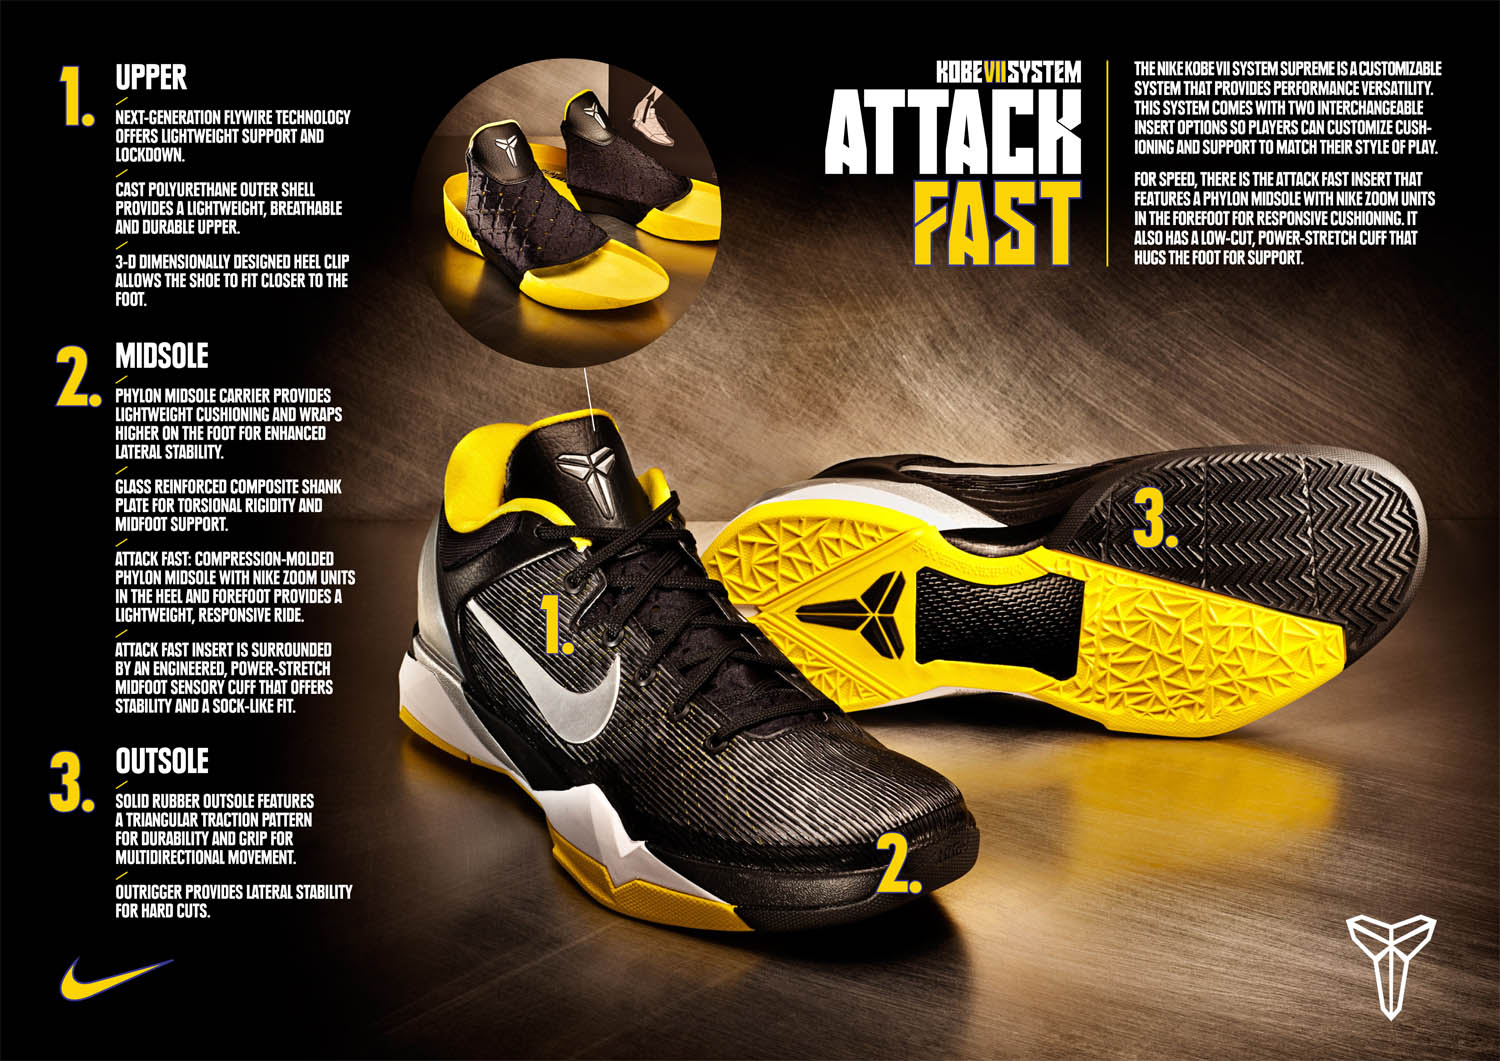 Nike Kobe VII System Supreme Fast Tech Sheet